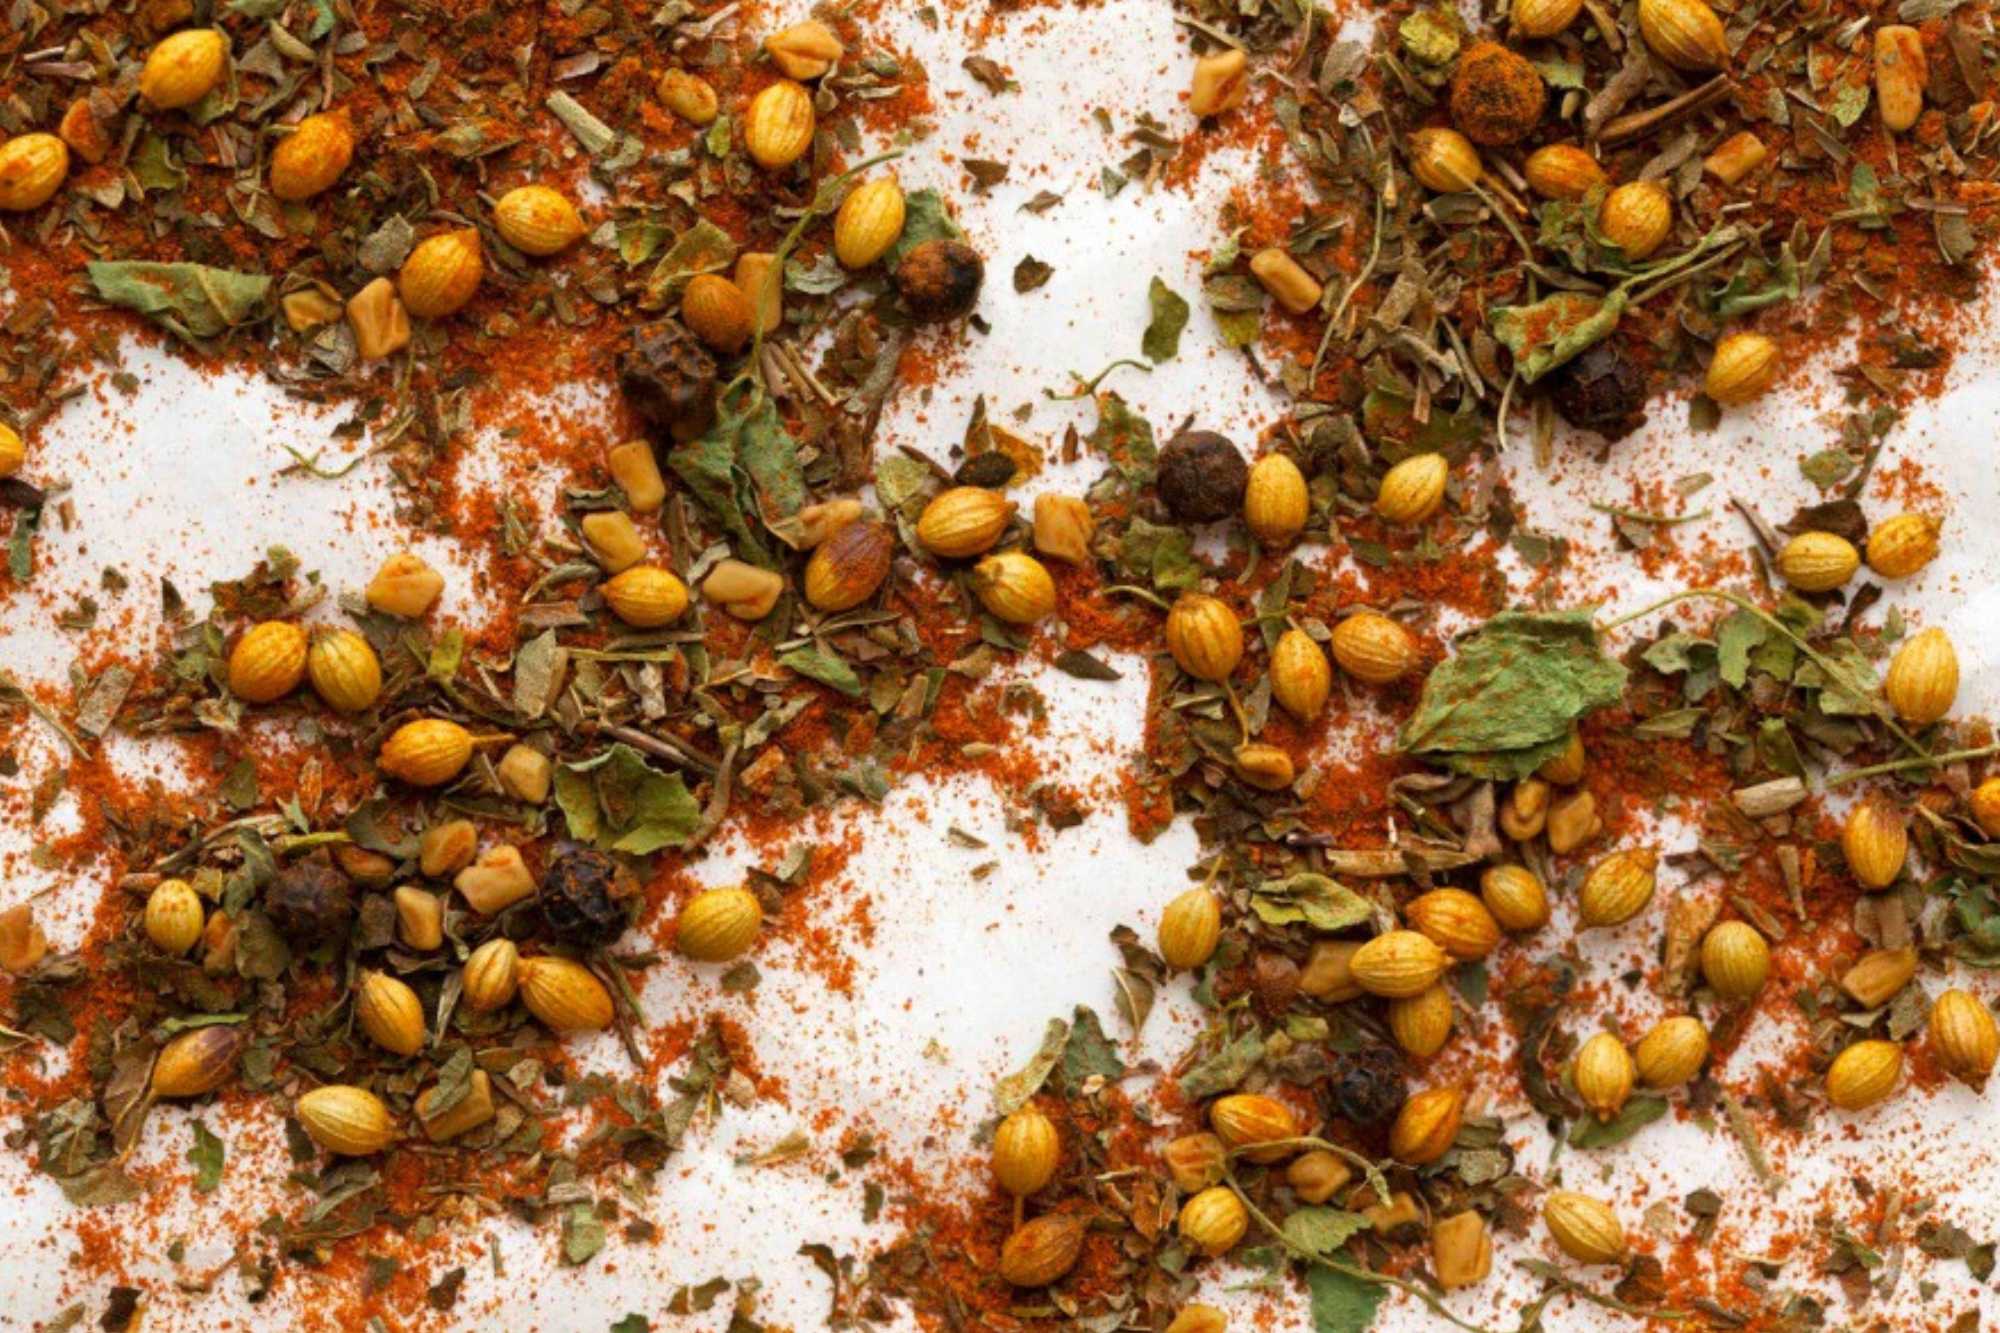 Keralaspices Garam Masala 2 in 1 Gift Box - Kerala Spices